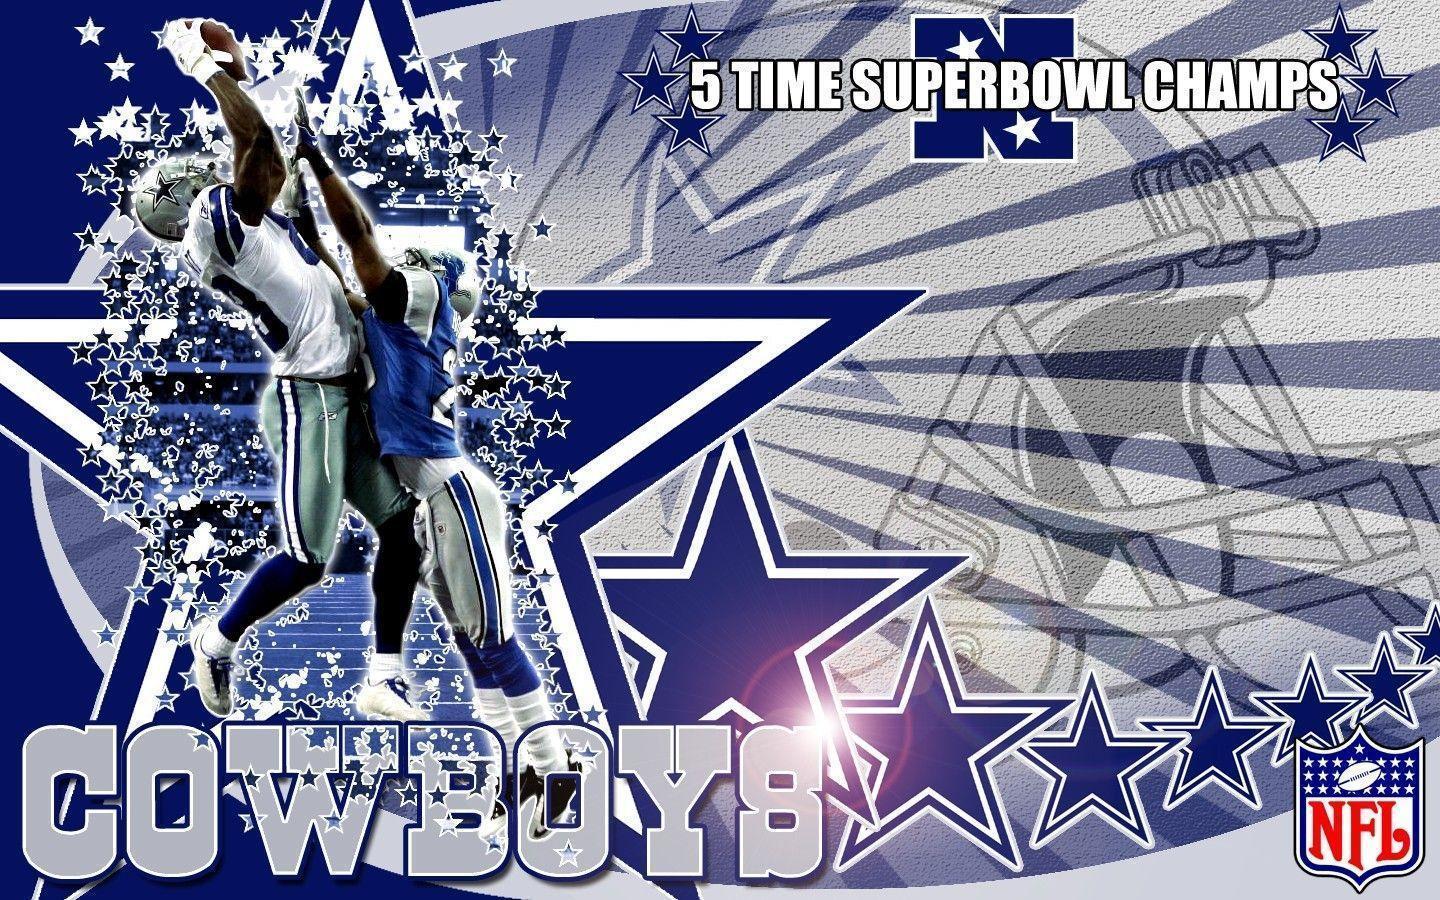 Dallas Cowboys Cheerleaders HD Wallpapers